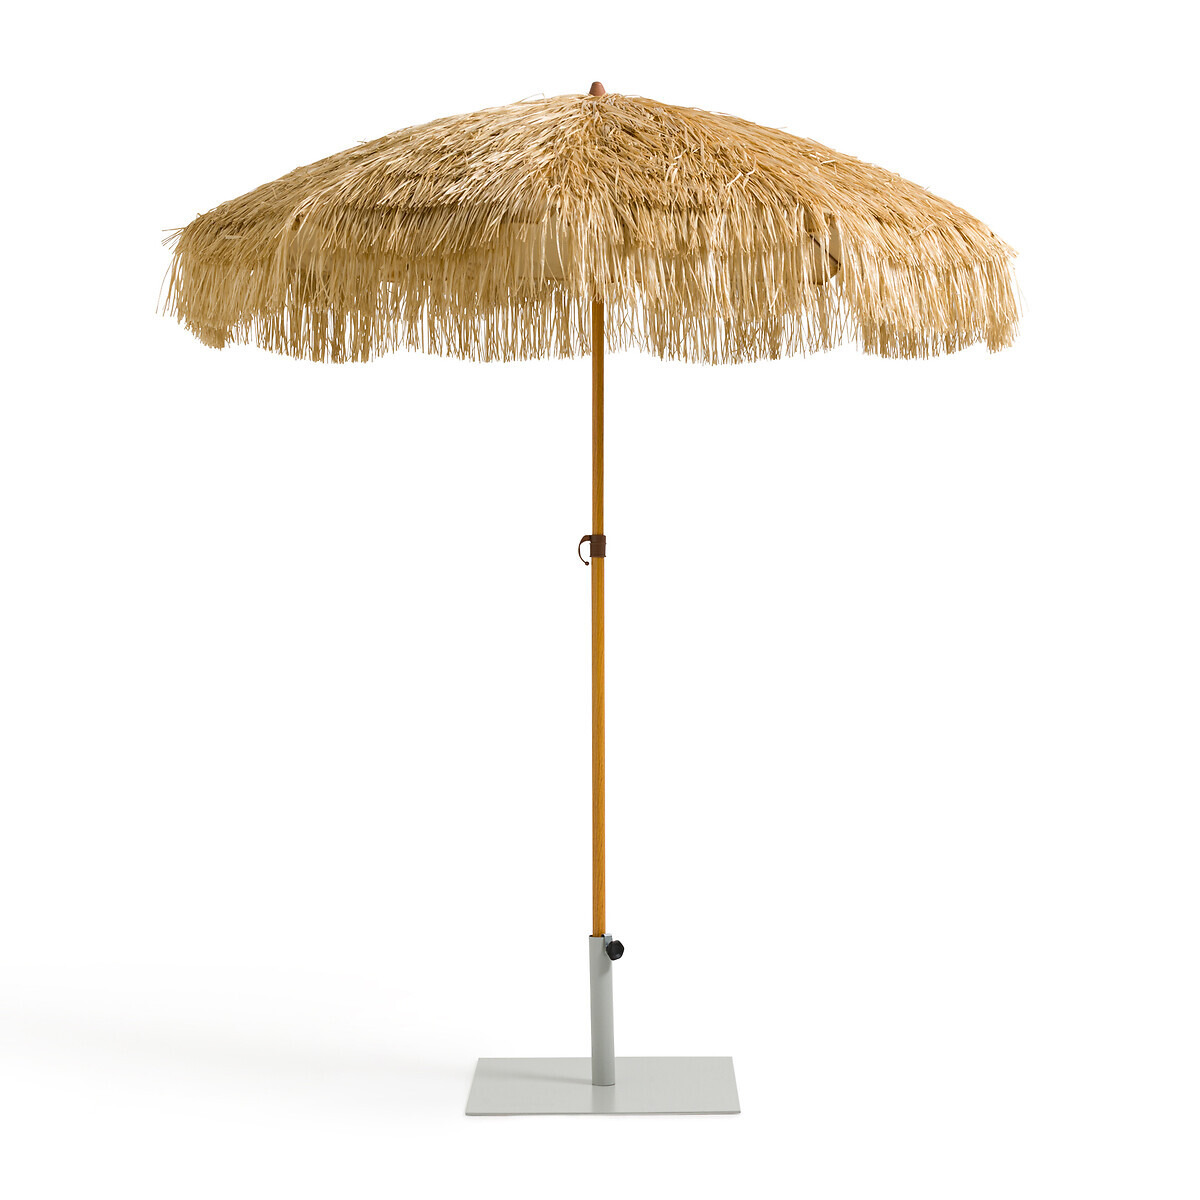 Alata Fringed Garden Parasol Umbrella - image 1